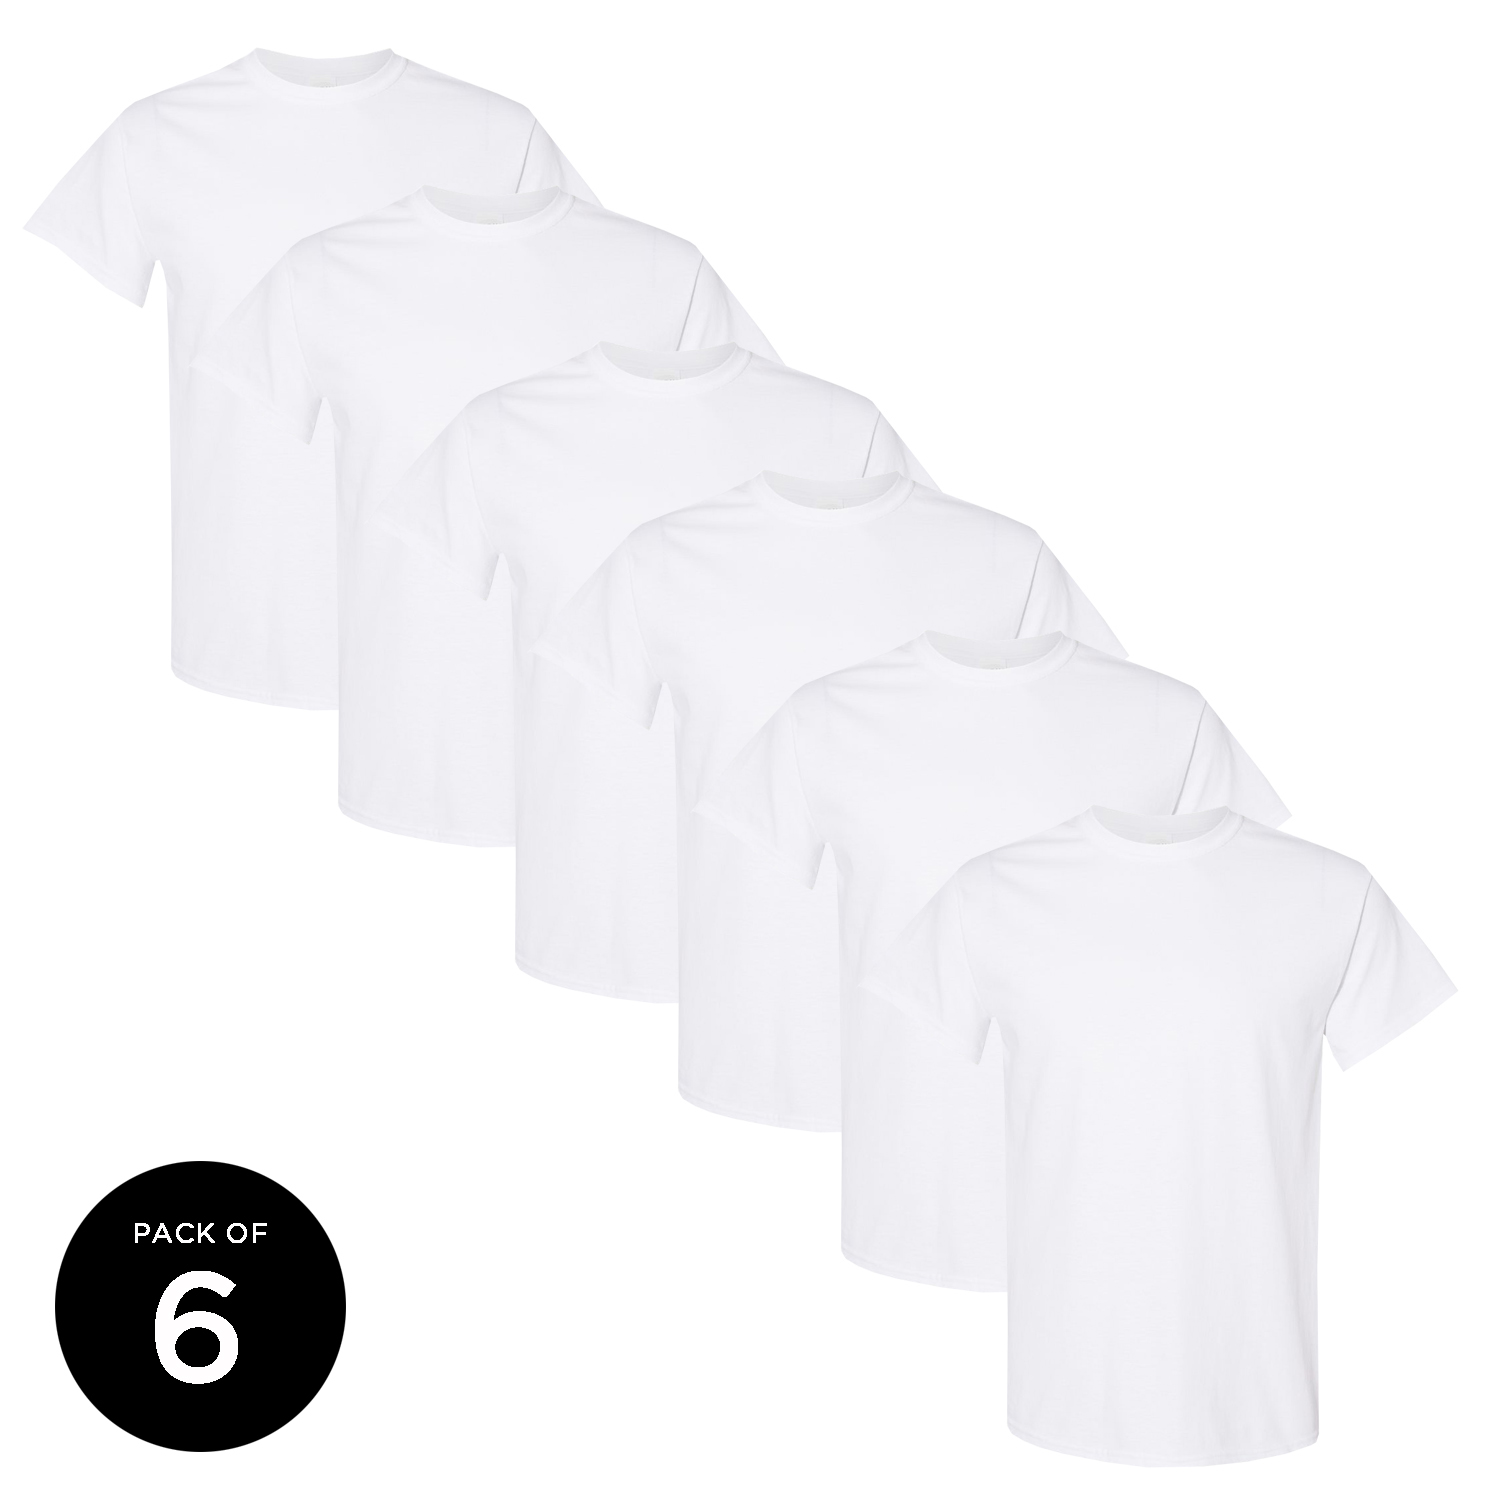 Gildan Men T-Shirts Value Pack White Shirts for Men - Single OR Pack of 6 OR Pack of 12 Shirts for Men Gildan T-shirts for Men T-shirt Casual Shirt Basic Shirts - image 1 of 4